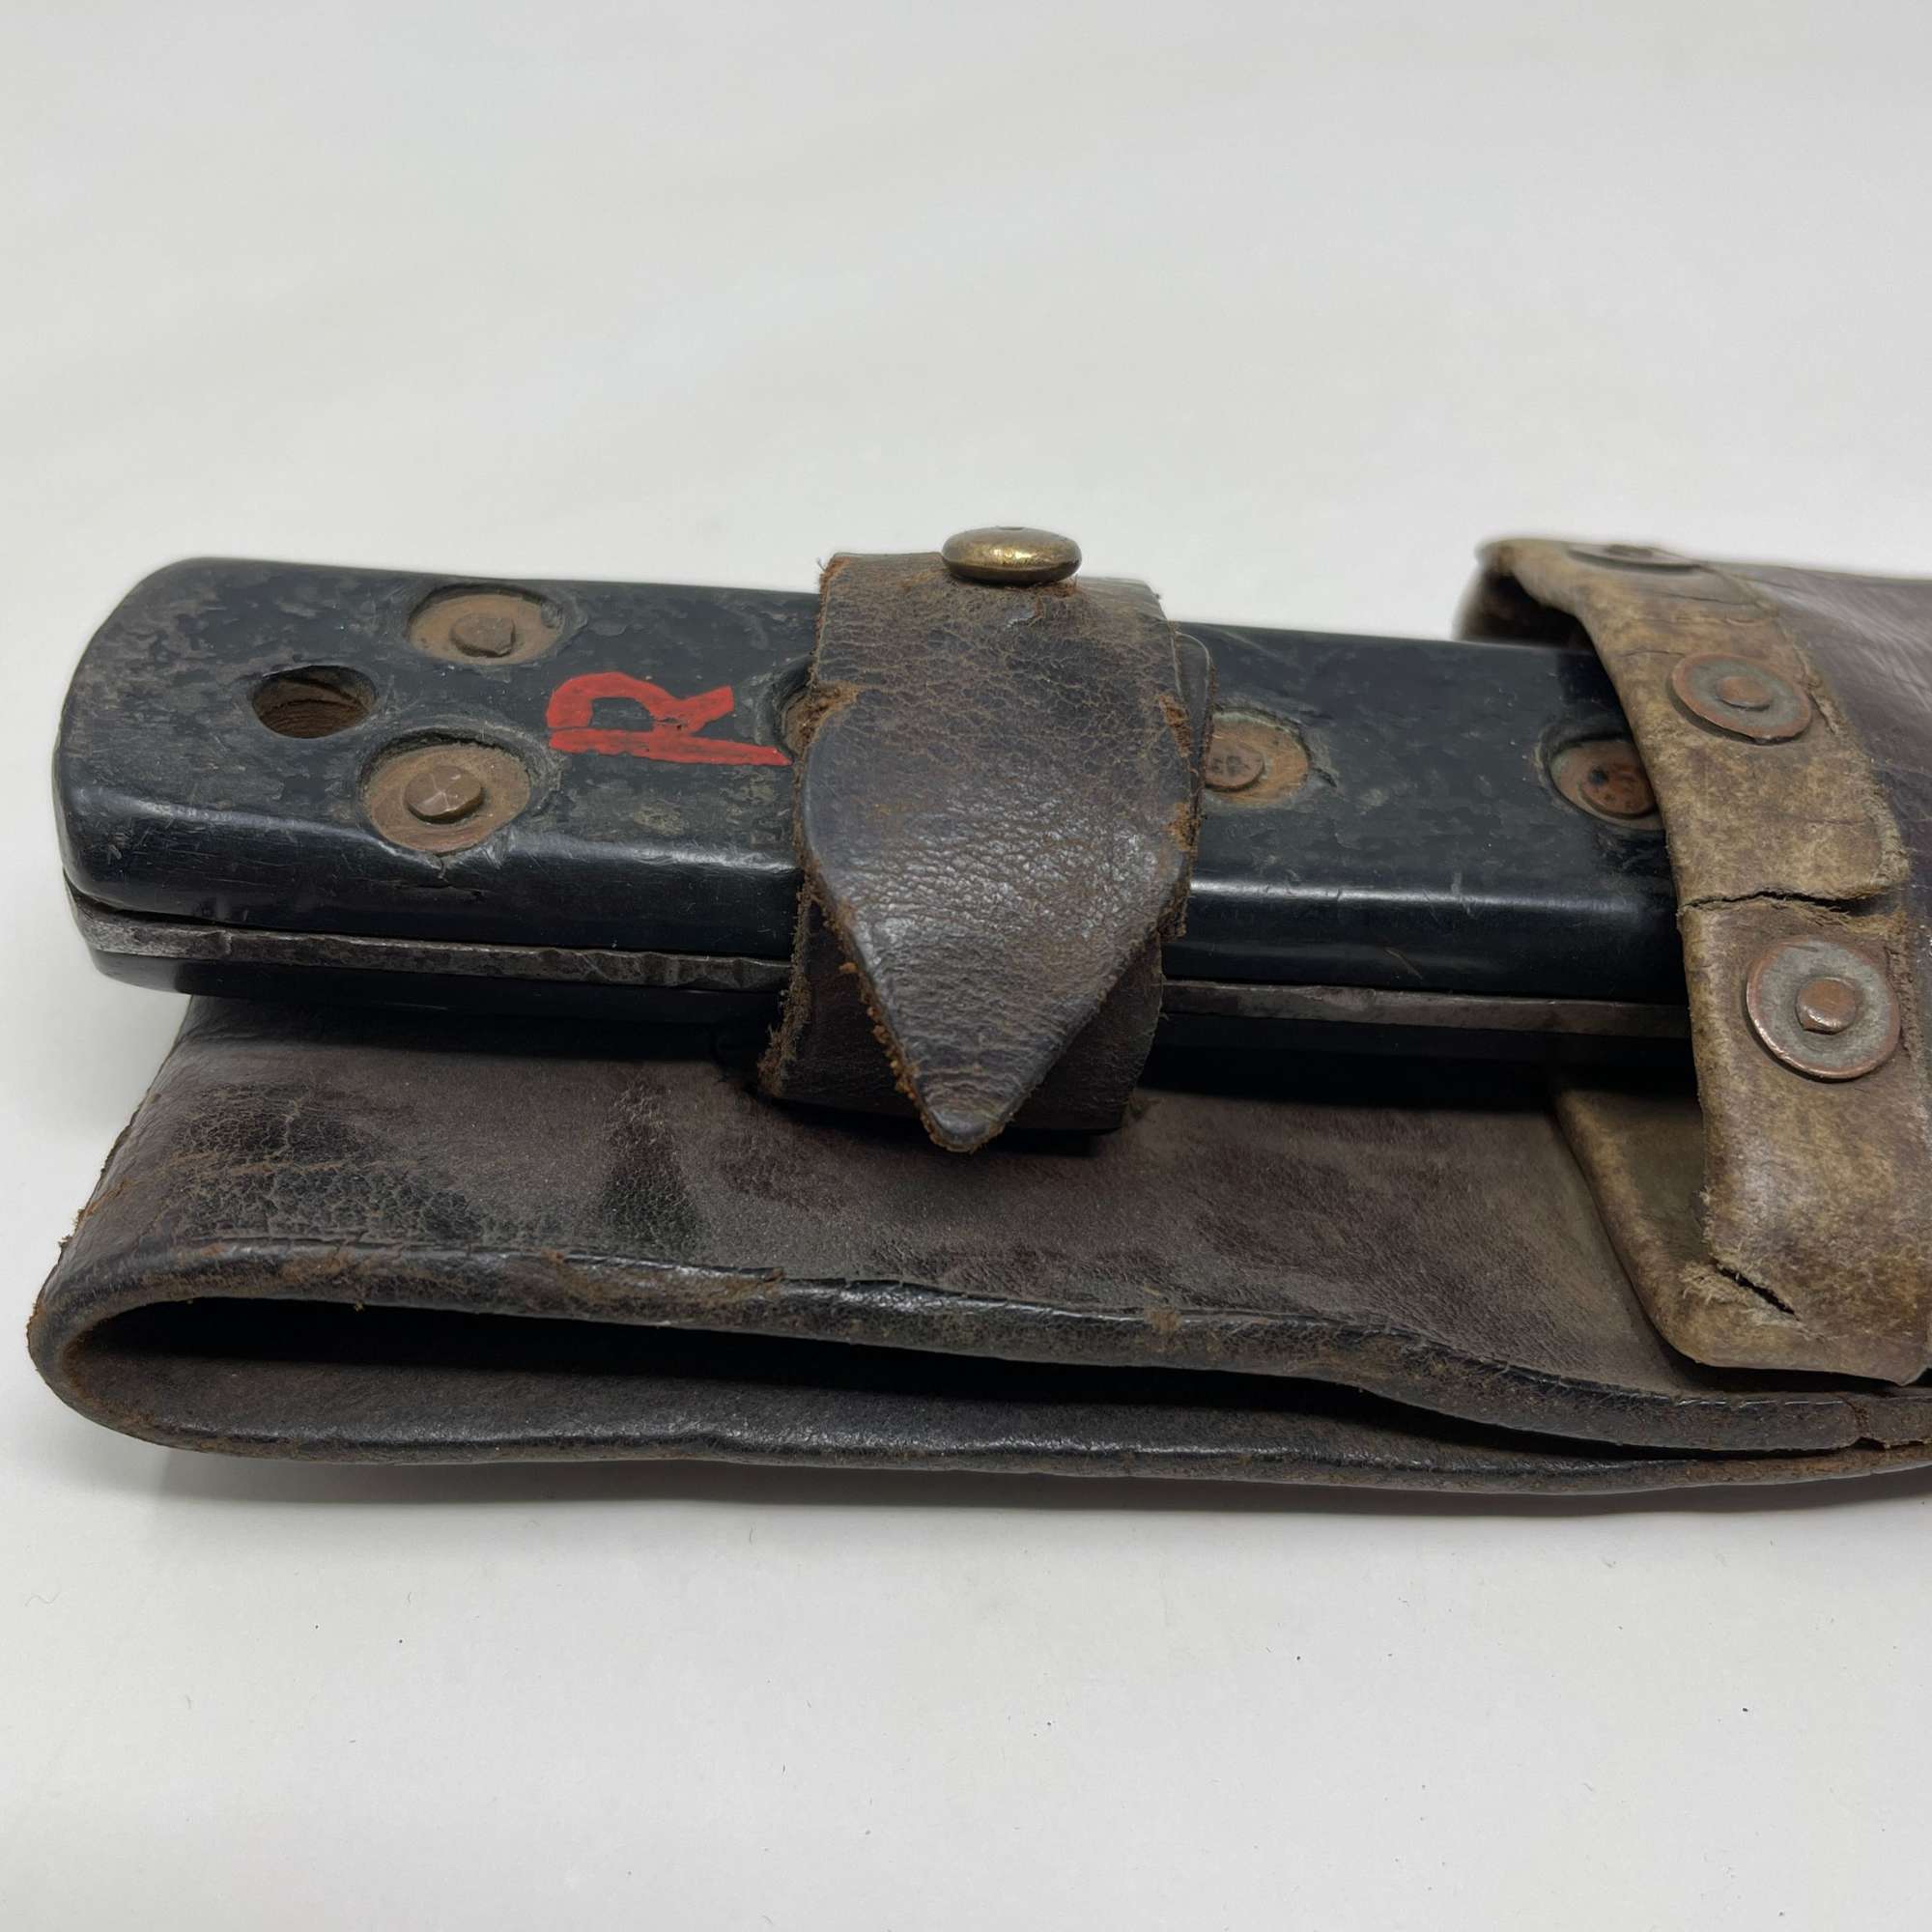 1943 Dated British Machete with Leather Sheath